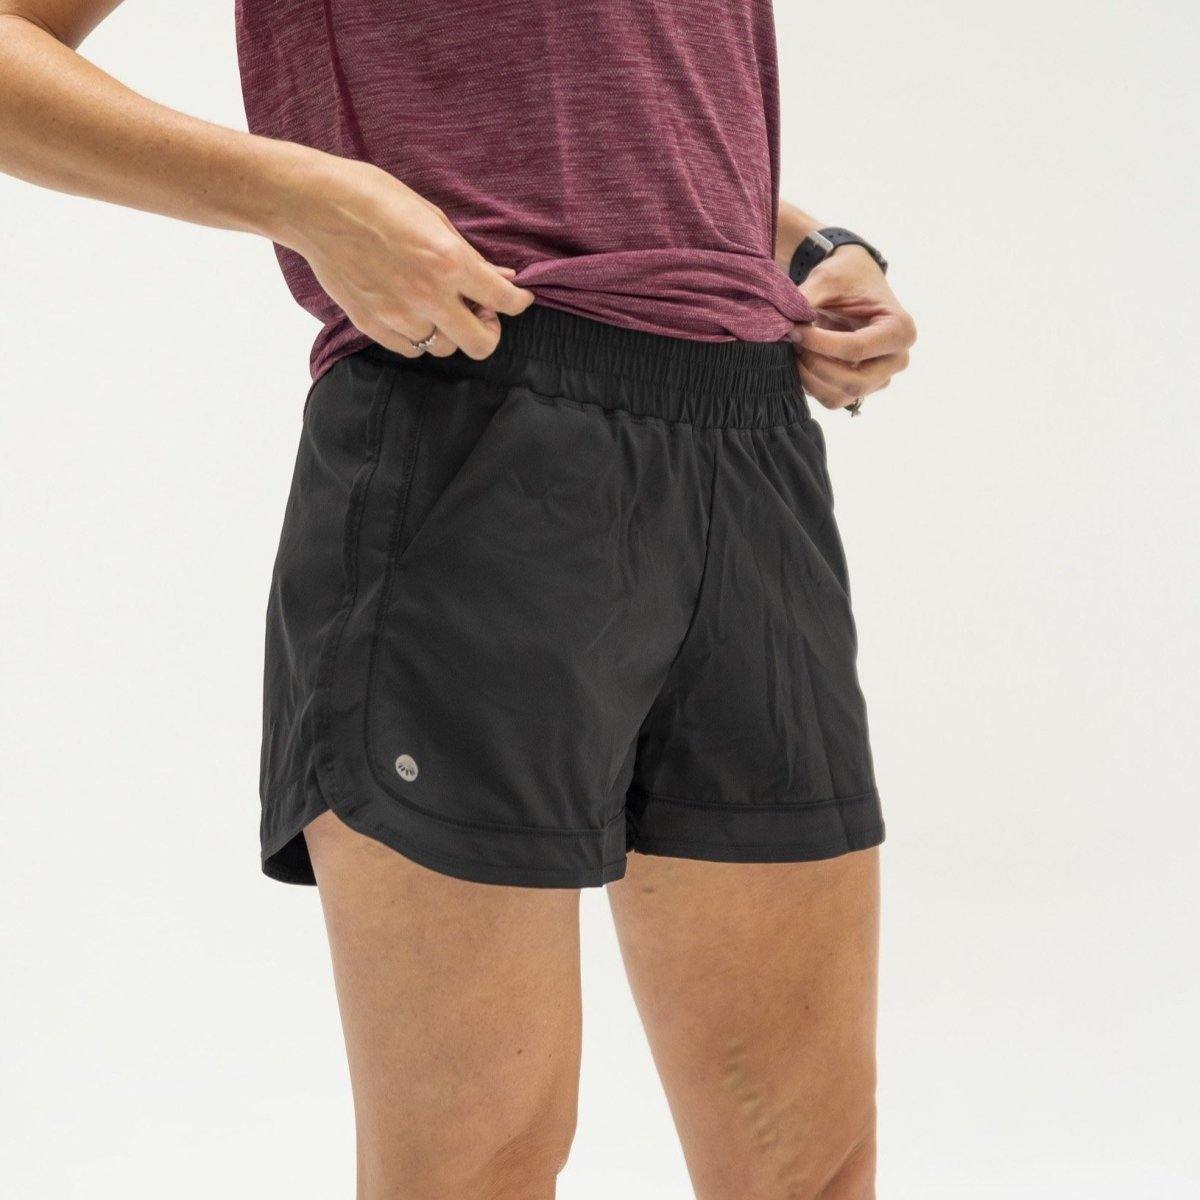 Sedona Shorts - Berry - FINAL SALE